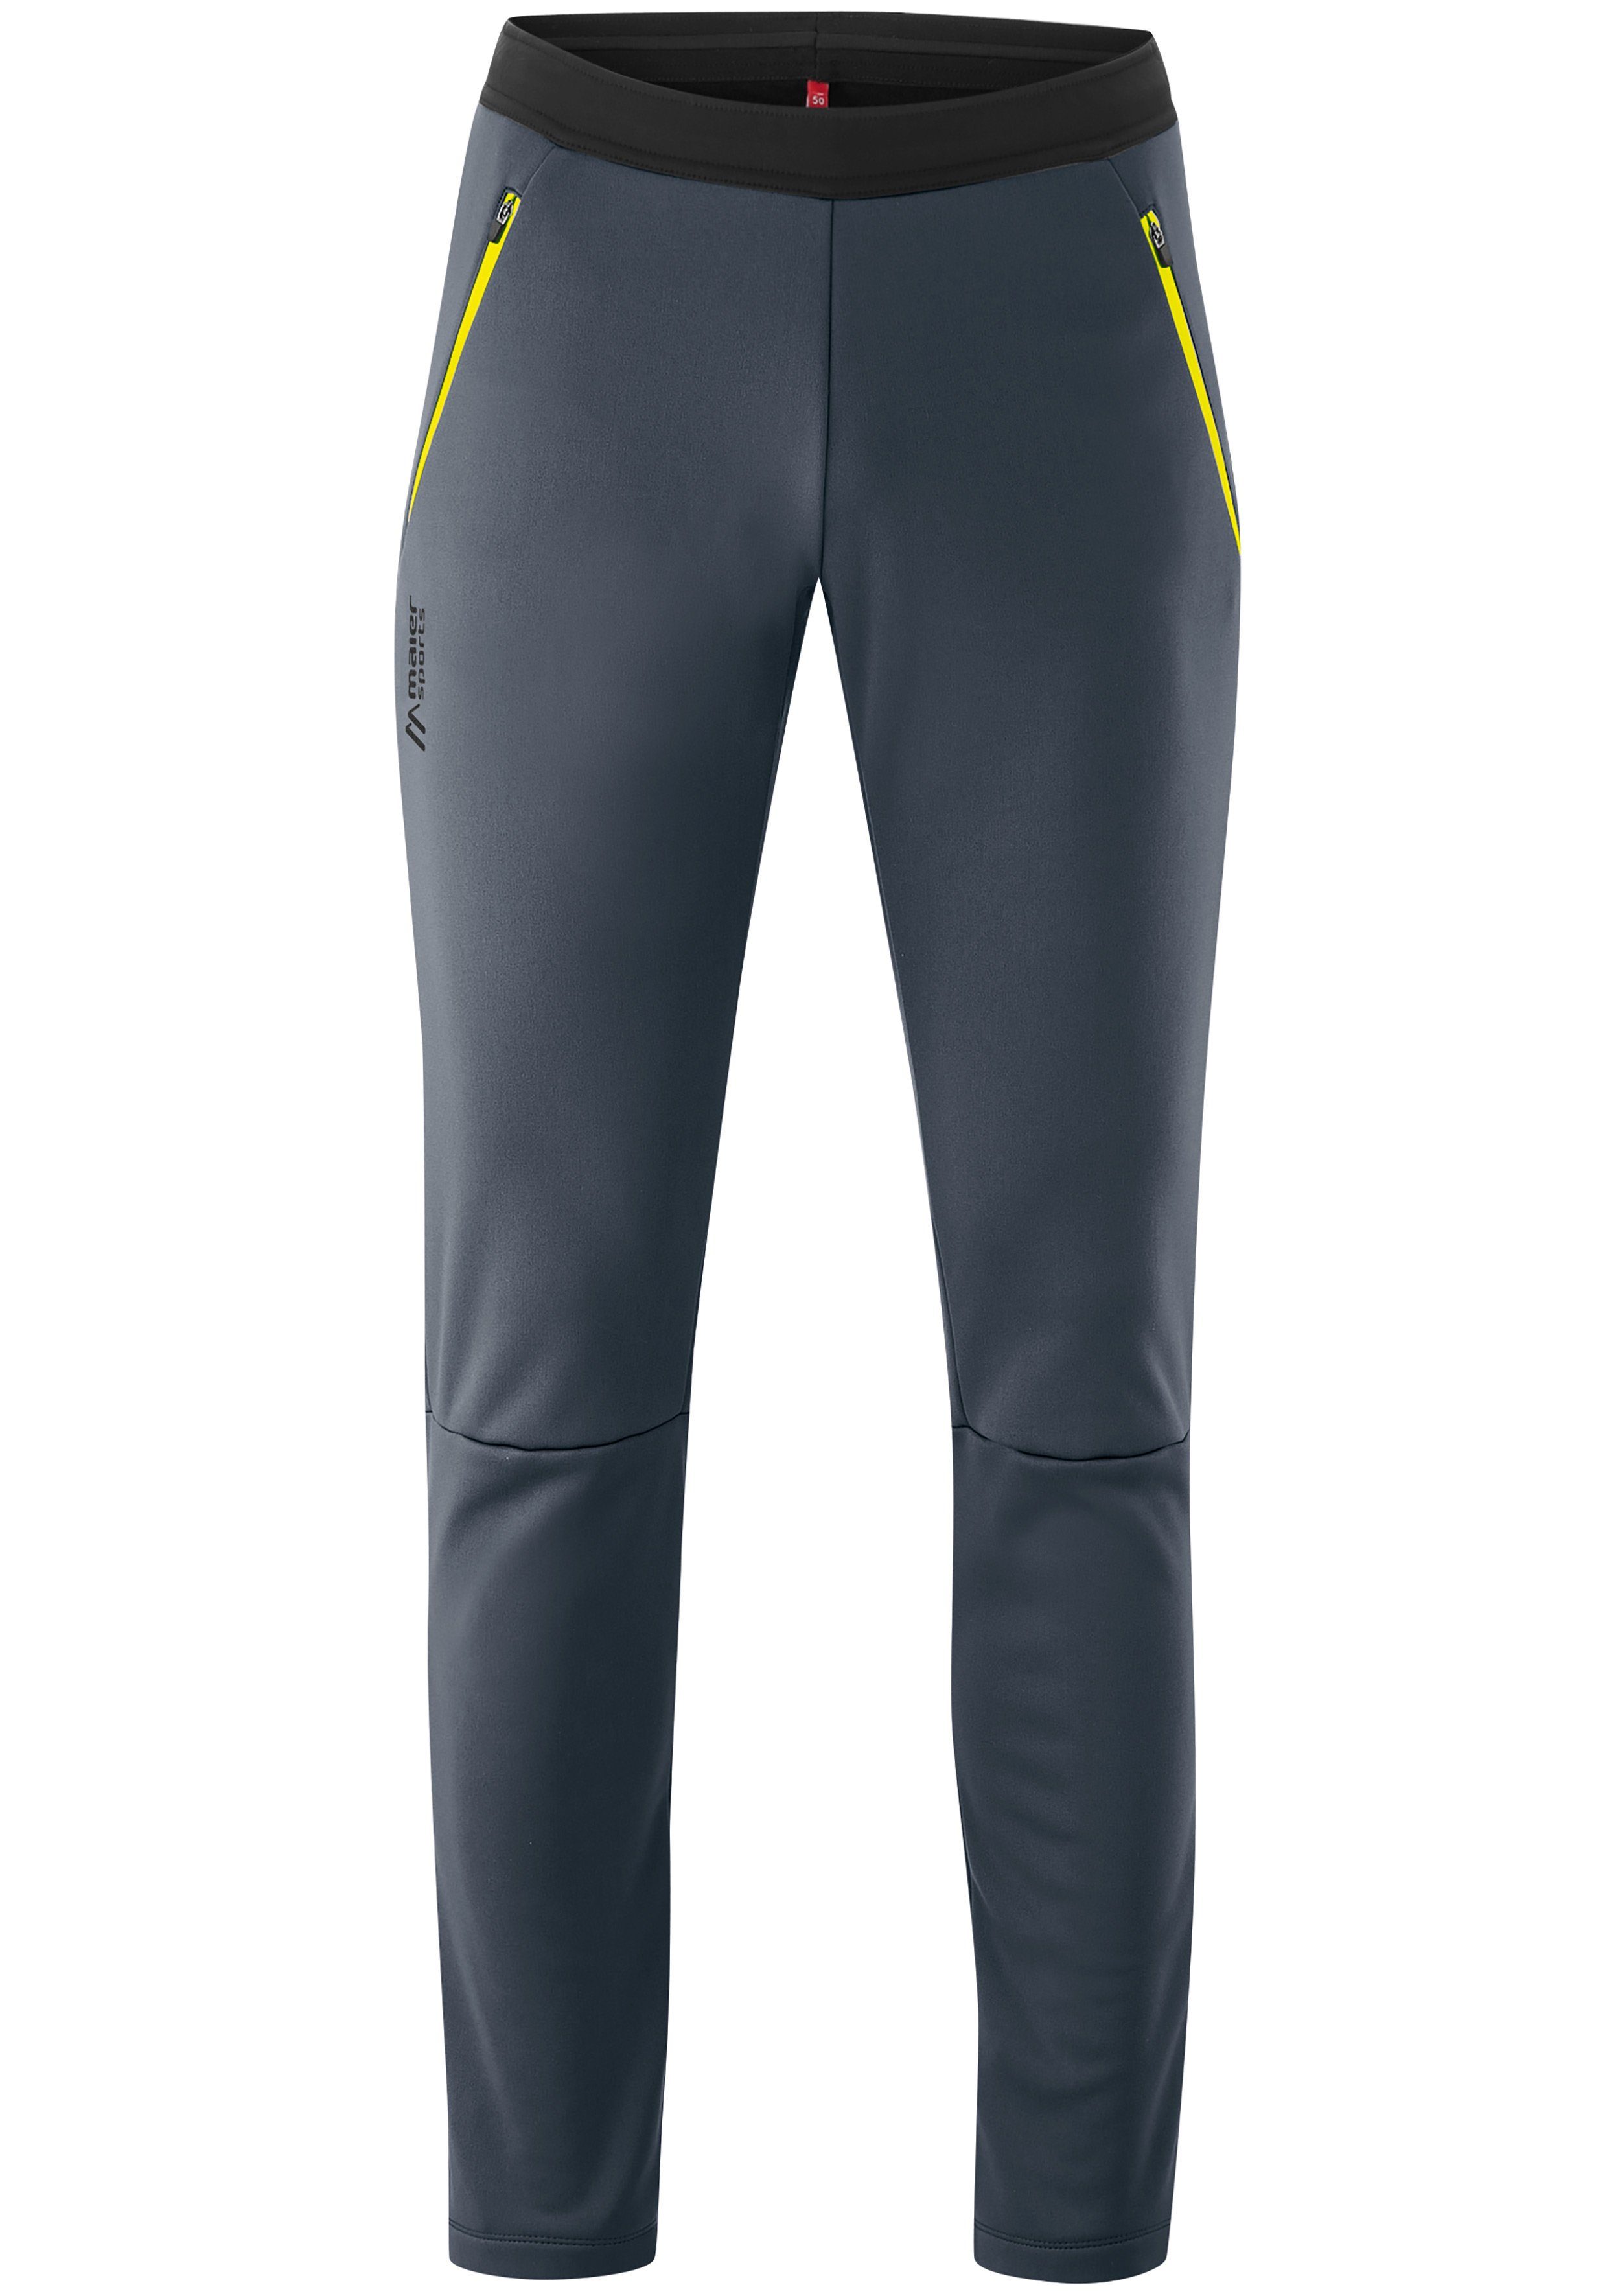 Maier Sports Softshellhose Malselv modernen graublau in Schnitt Softshell-Hose Pants Slim-Fit M komfortable